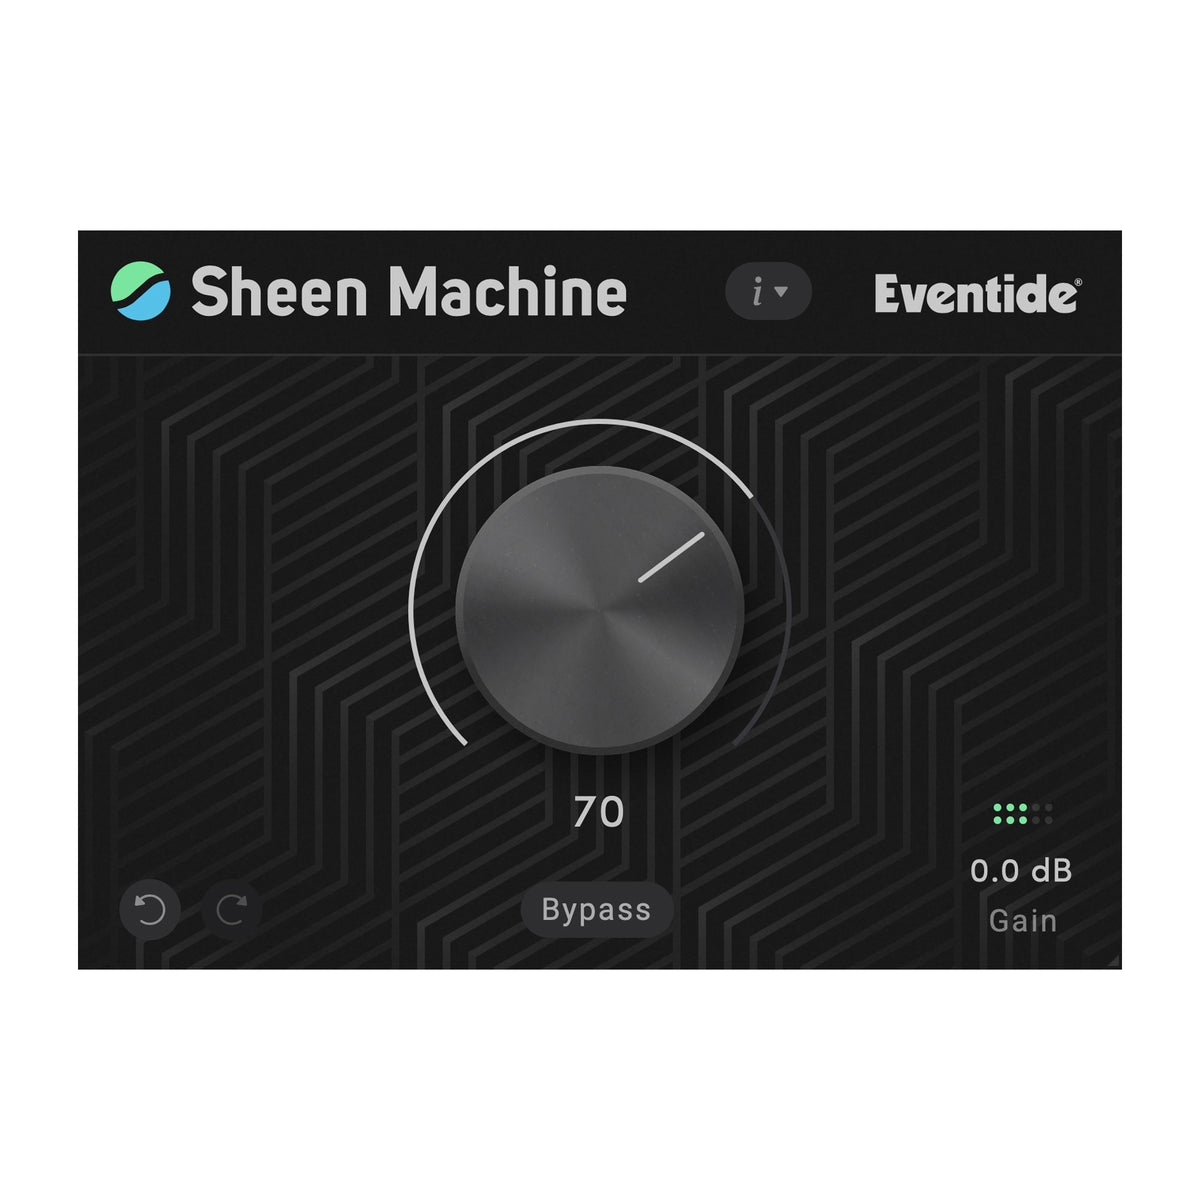 Sheen Machine product image